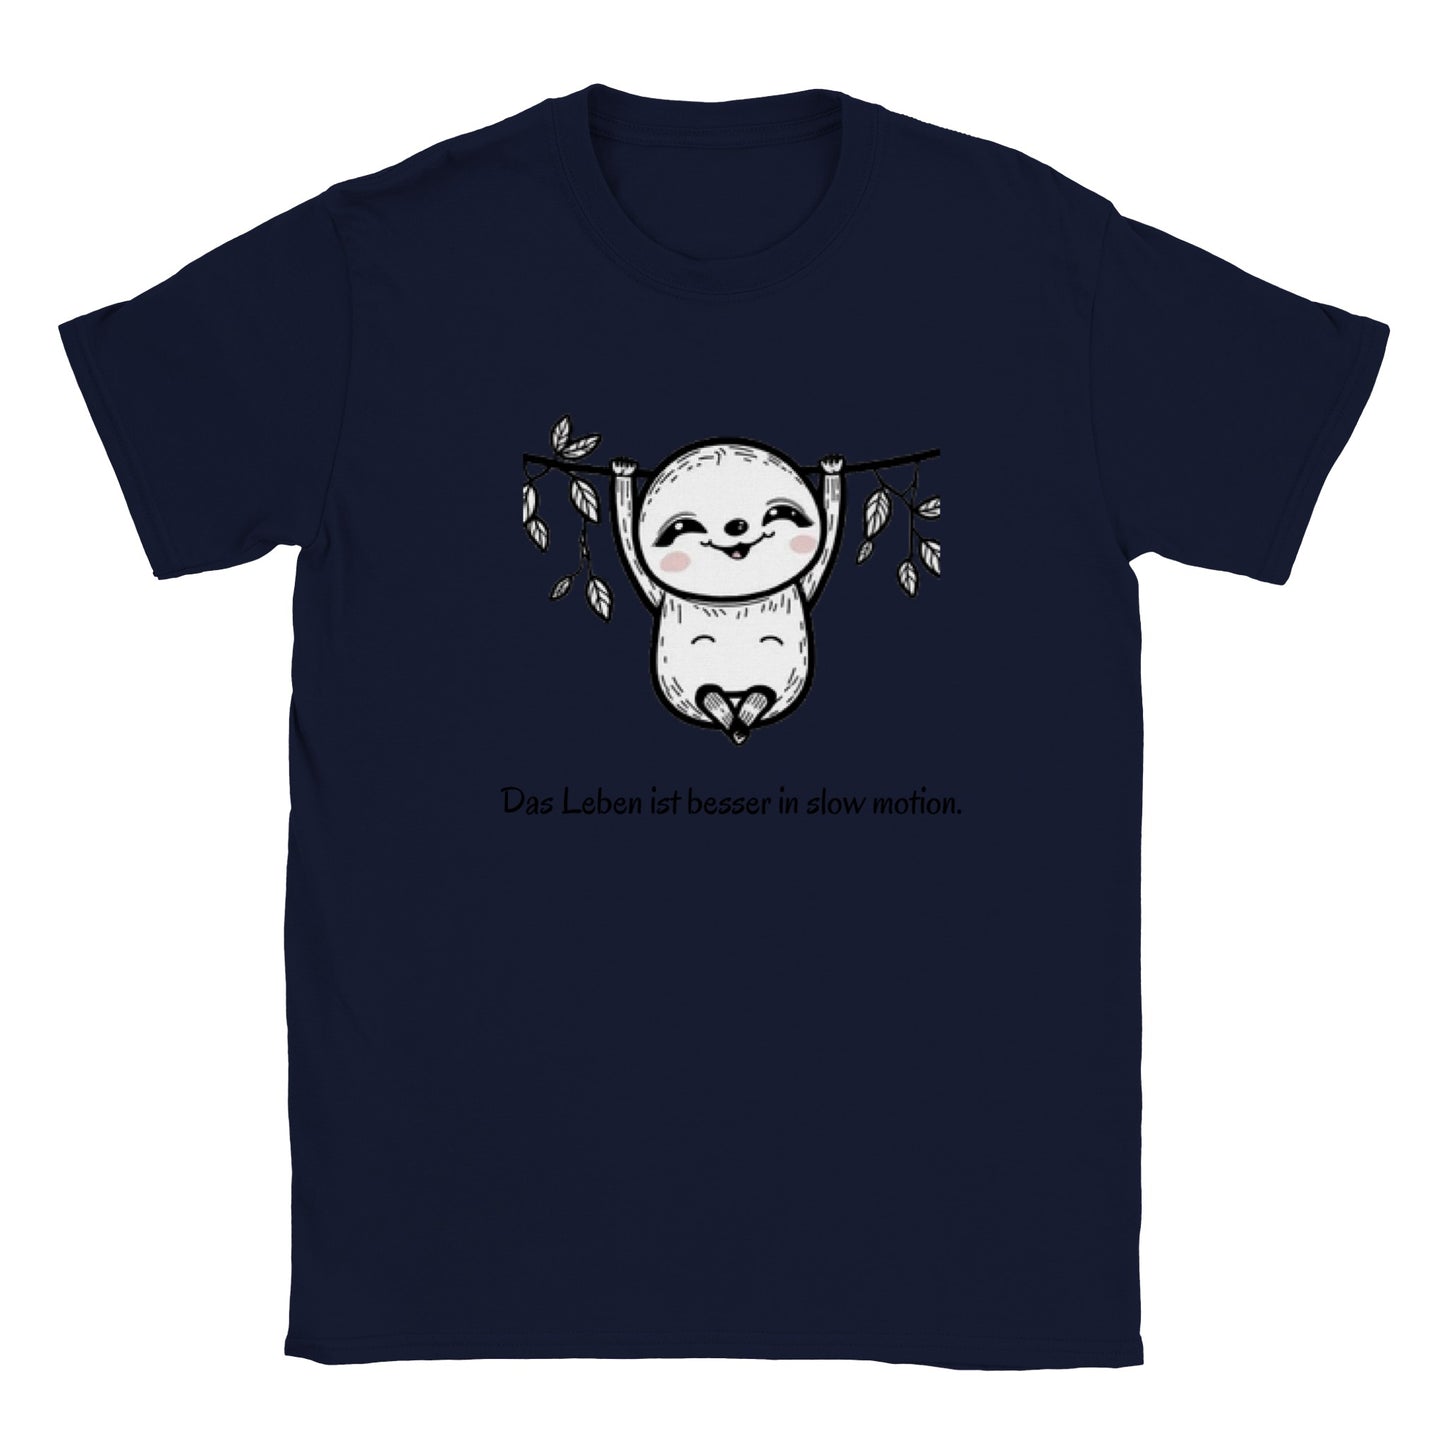 Classic Kids Crewneck T-shirt "Sloth"